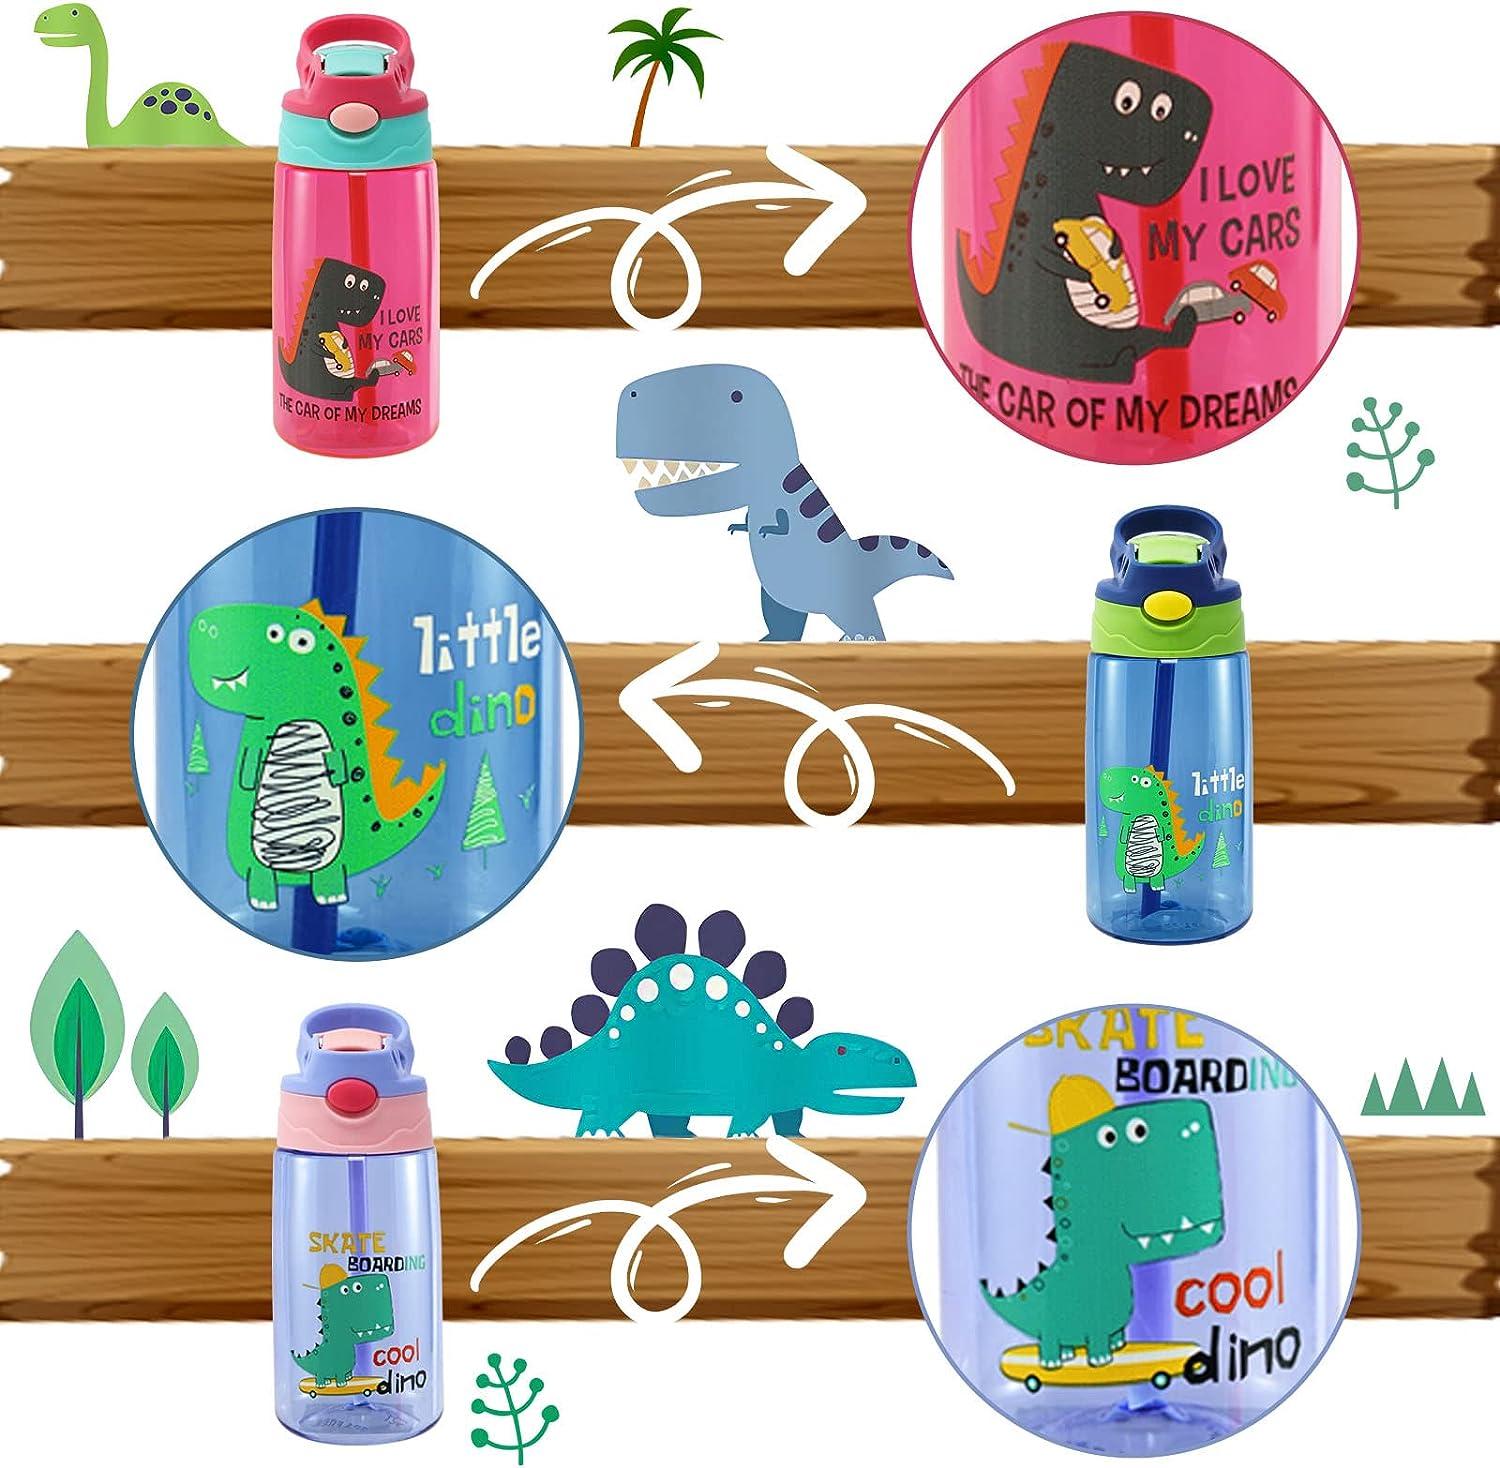 ROISDIYI Kids Water Bottle for School with Straw, 20 OZ Motivational Water  Bottle BPA-Free Reusable …See more ROISDIYI Kids Water Bottle for School